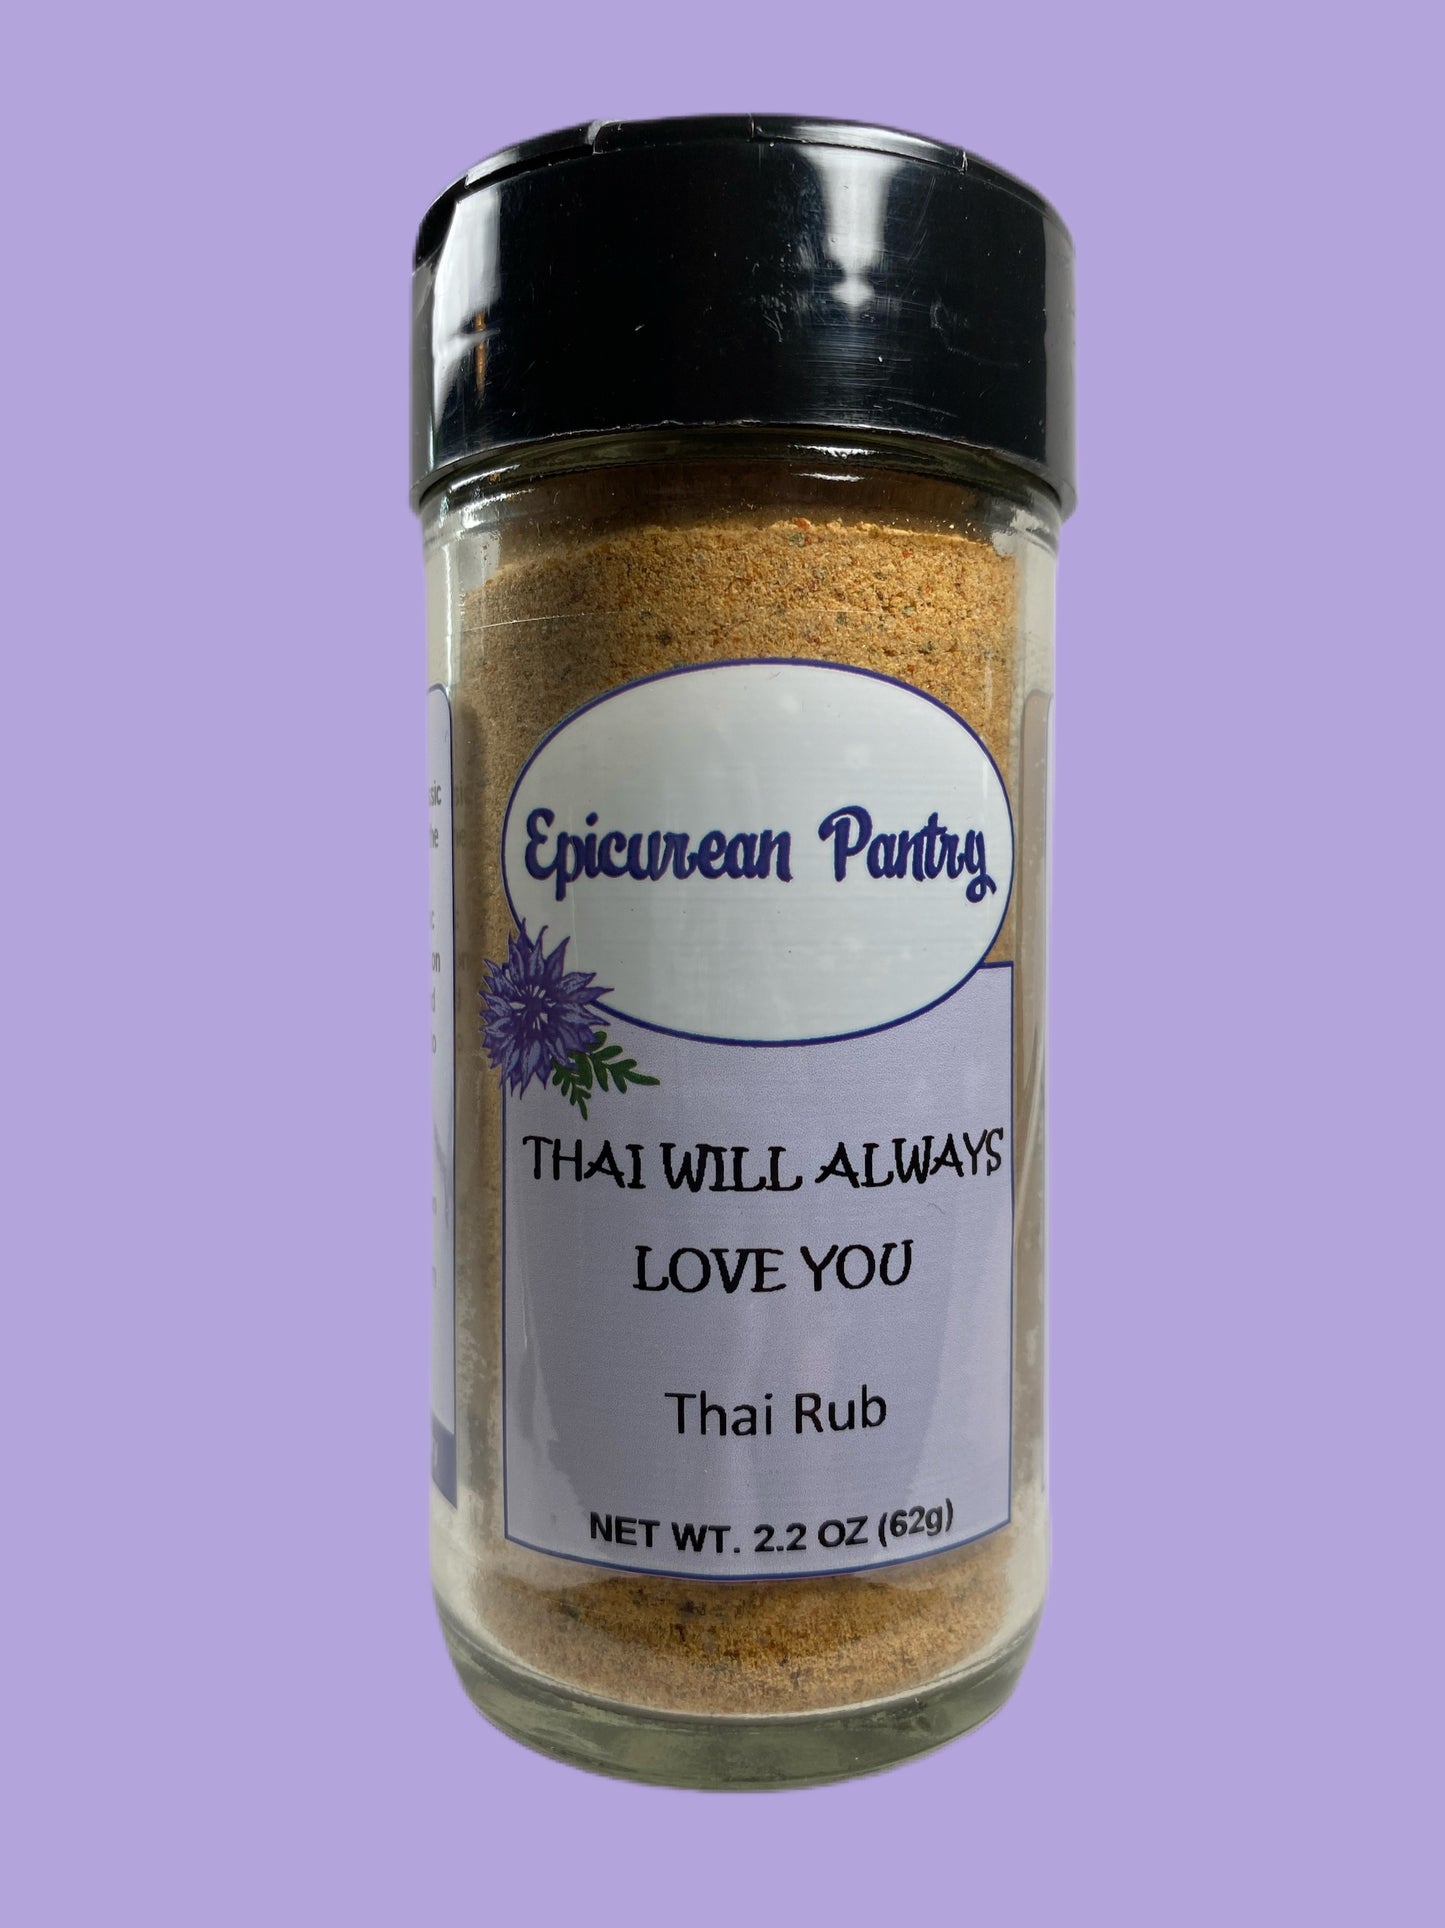 Thai Will Always Love You - Thai Rub - 2.2 oz net wt